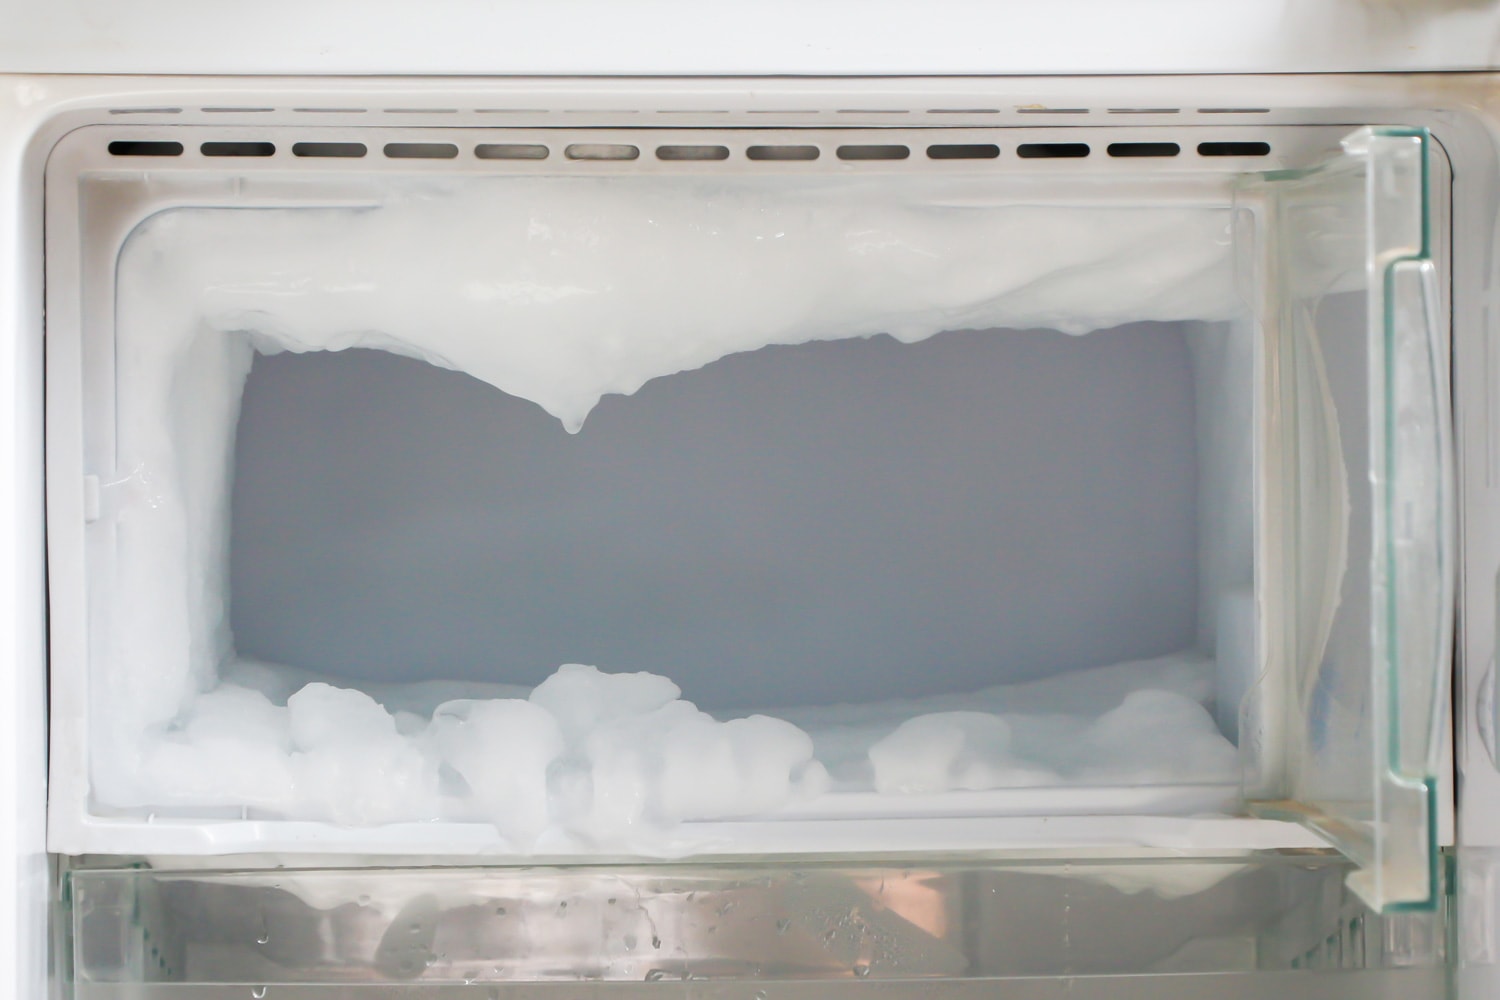 Many Ice frozen in the fridge